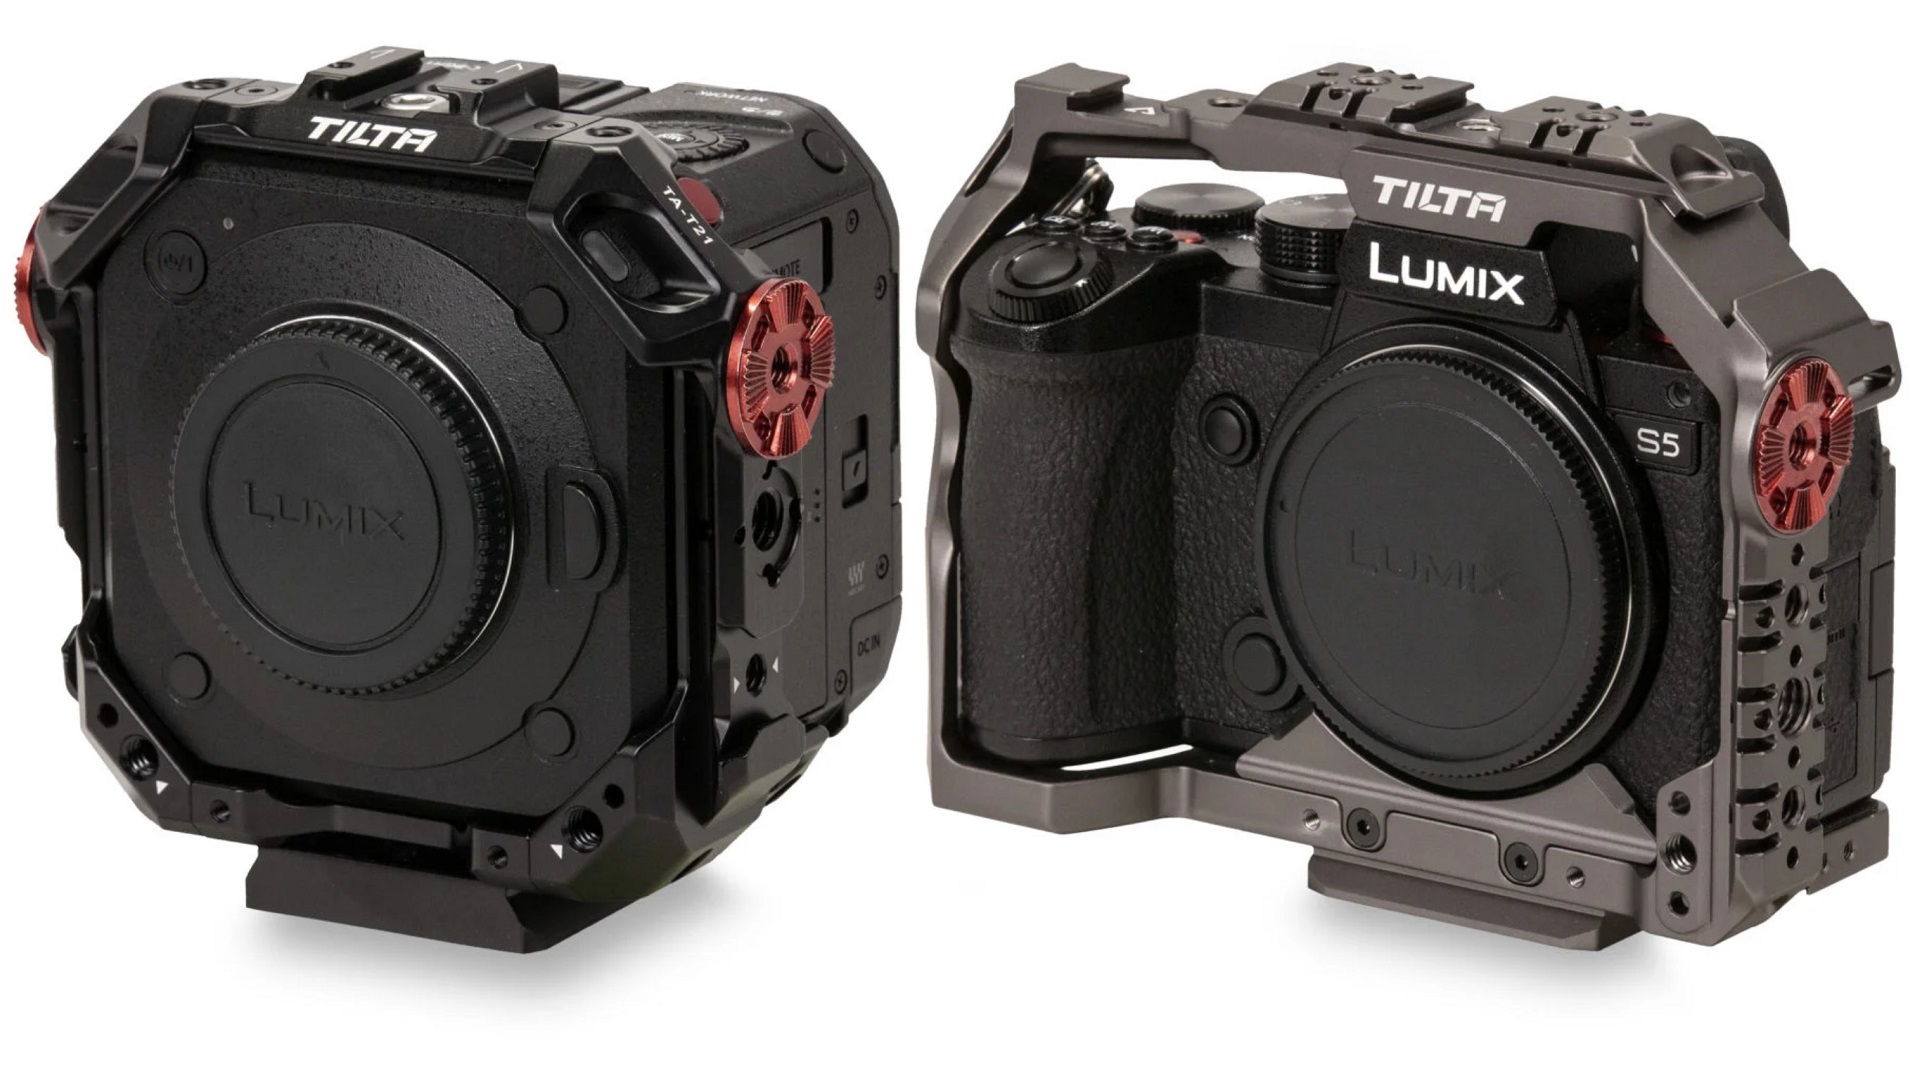 TILTA パナソニック LUMXI S5カメラ用 フルカメラケージ Kit C 関連アクセサリー付きTA-T39-C-B ブラック グレー